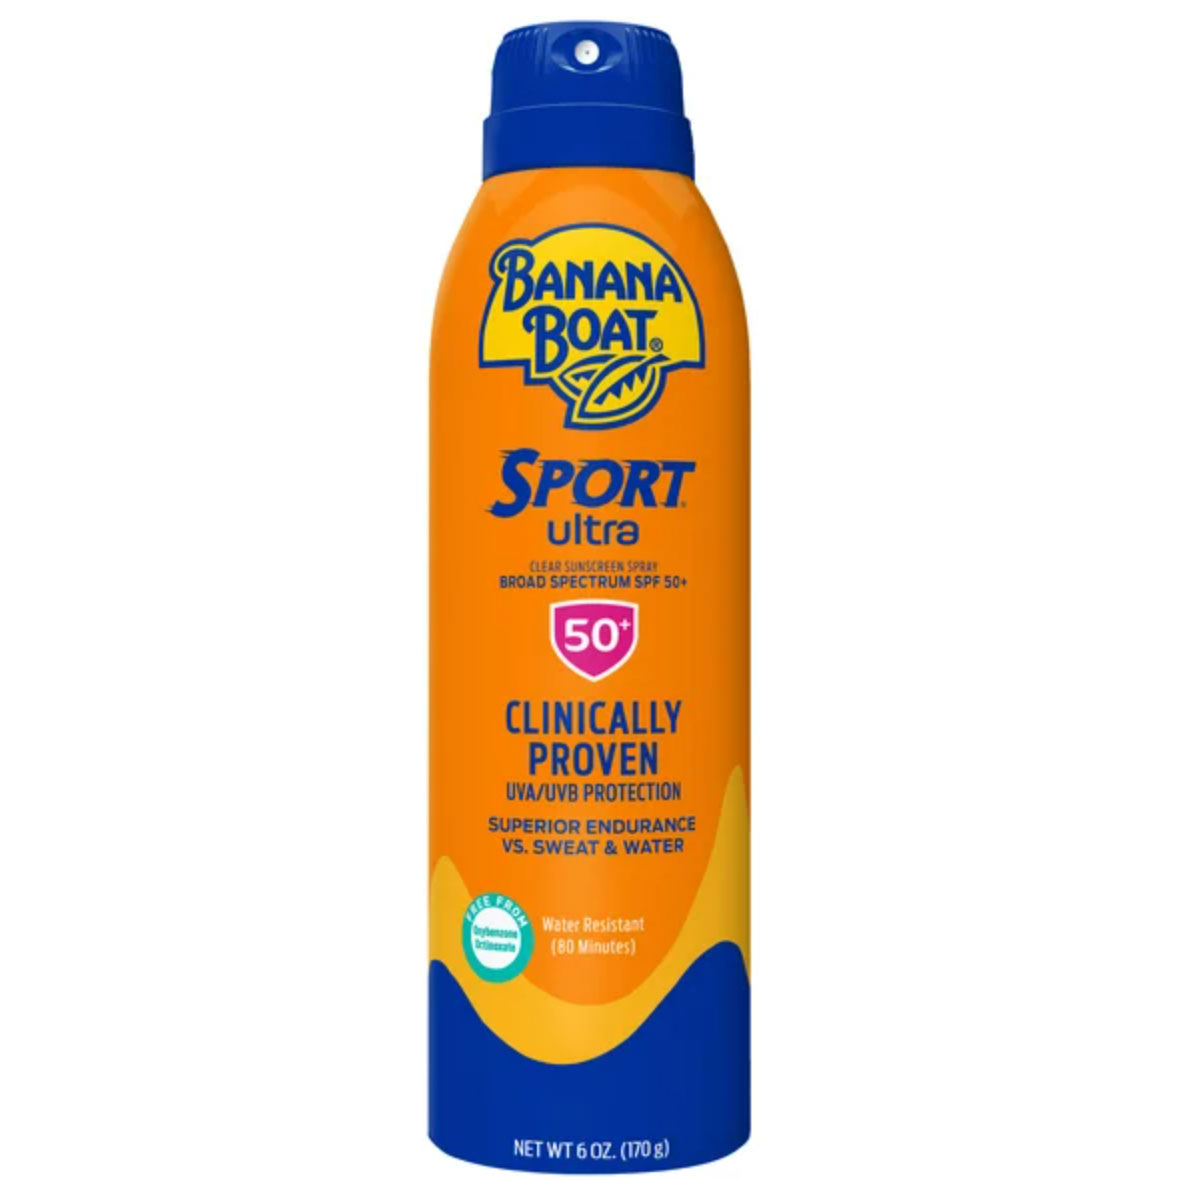 Banana Boat Sport Ultra 50 SPF Sunscreen Spray in orange cylinder bottle